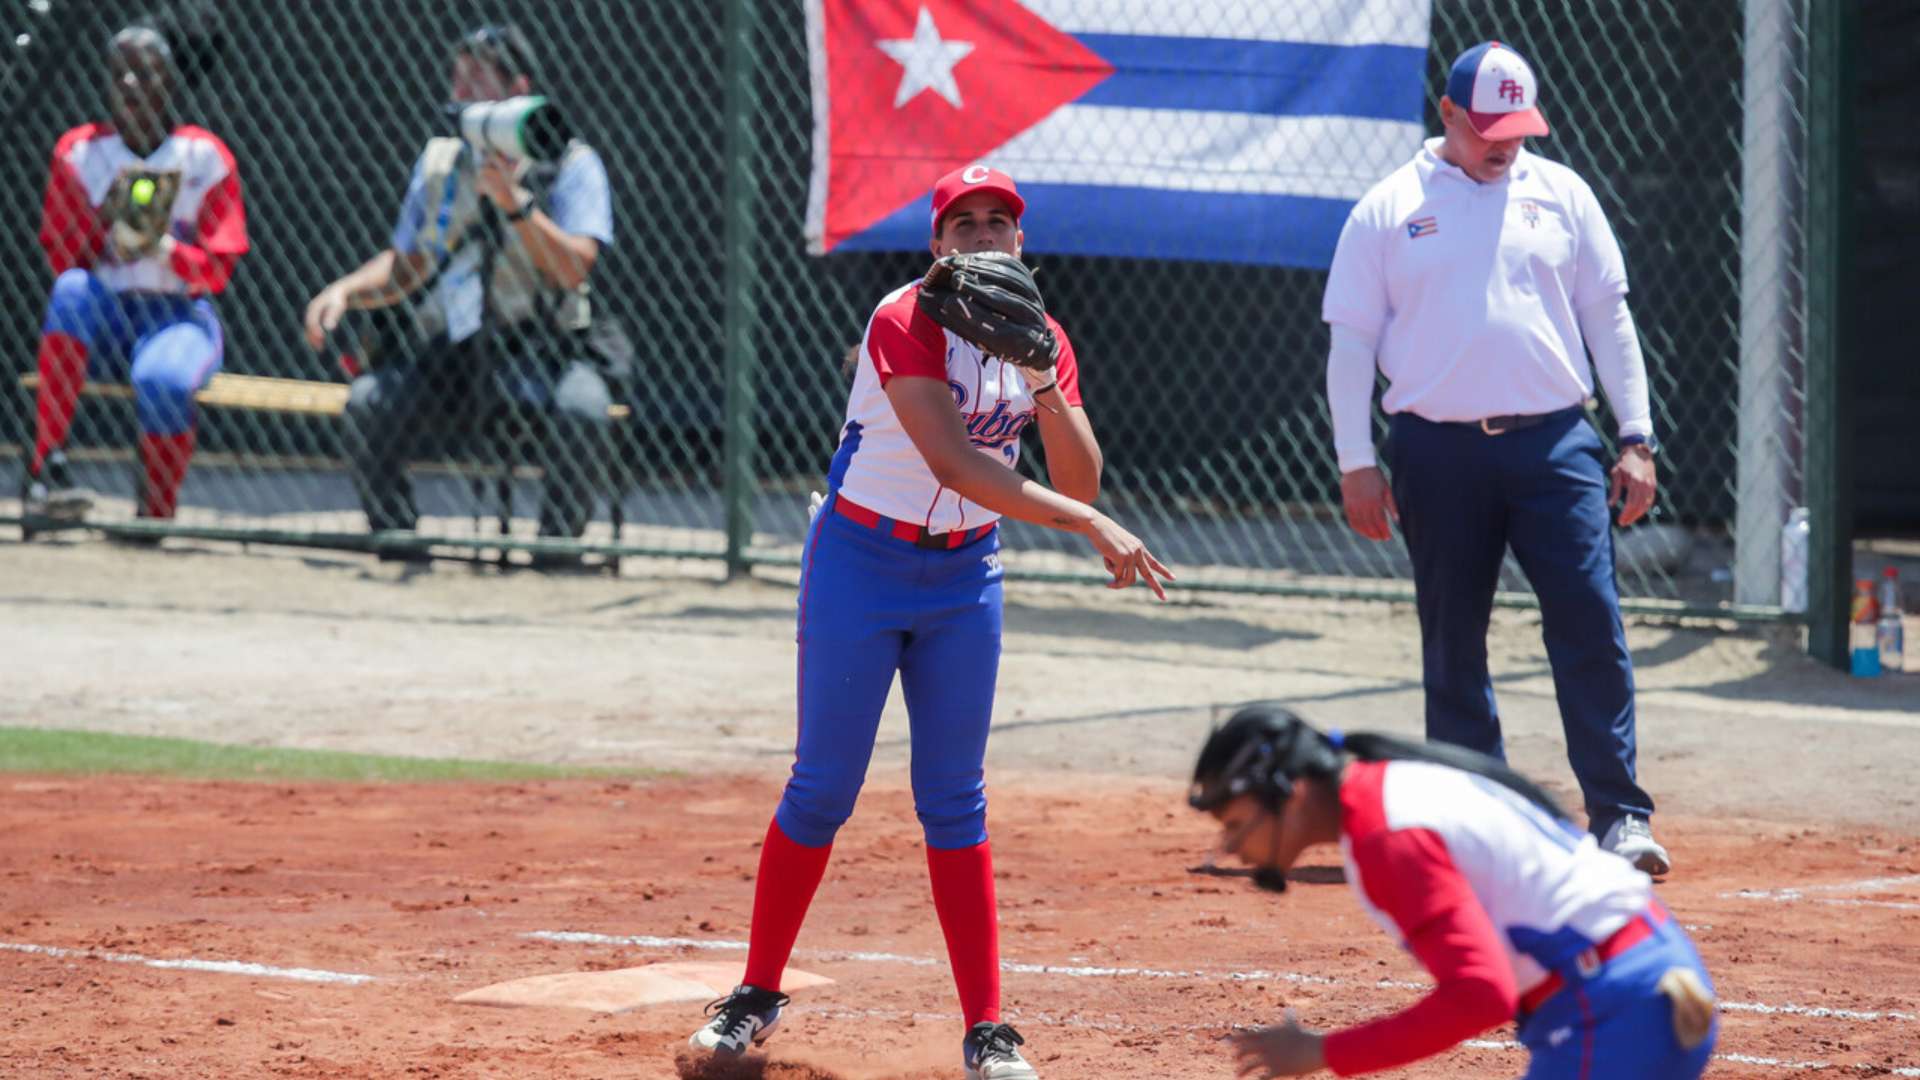 Female's softball: Cuba defeats Peru